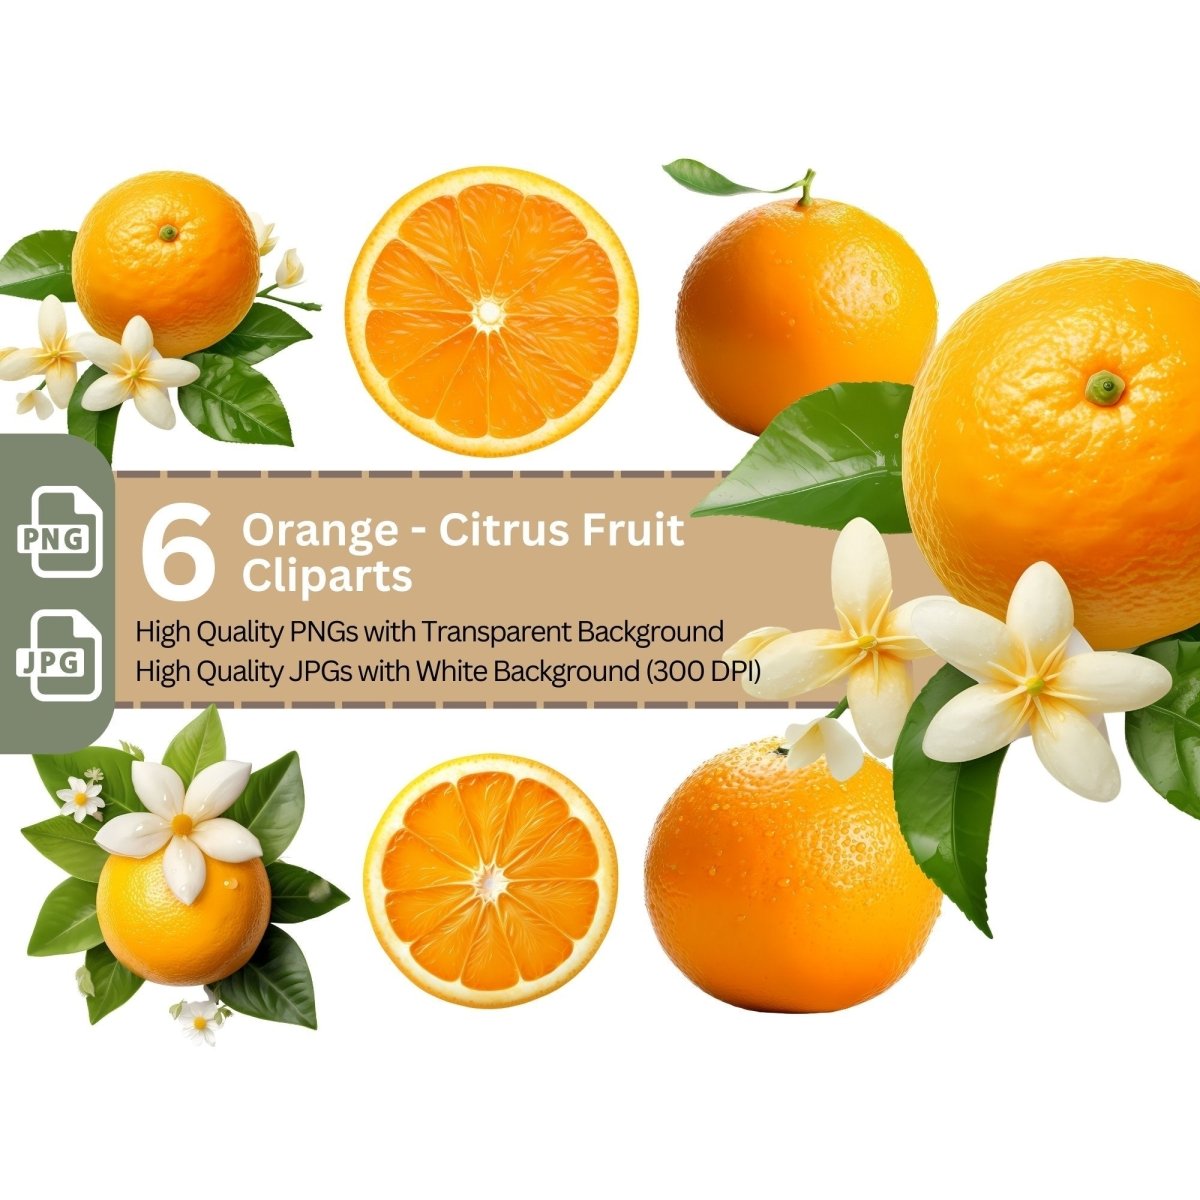 Orange Citrus Fruit Clipart 6+6 High Quality PNGs Bundle - Everything Pixel